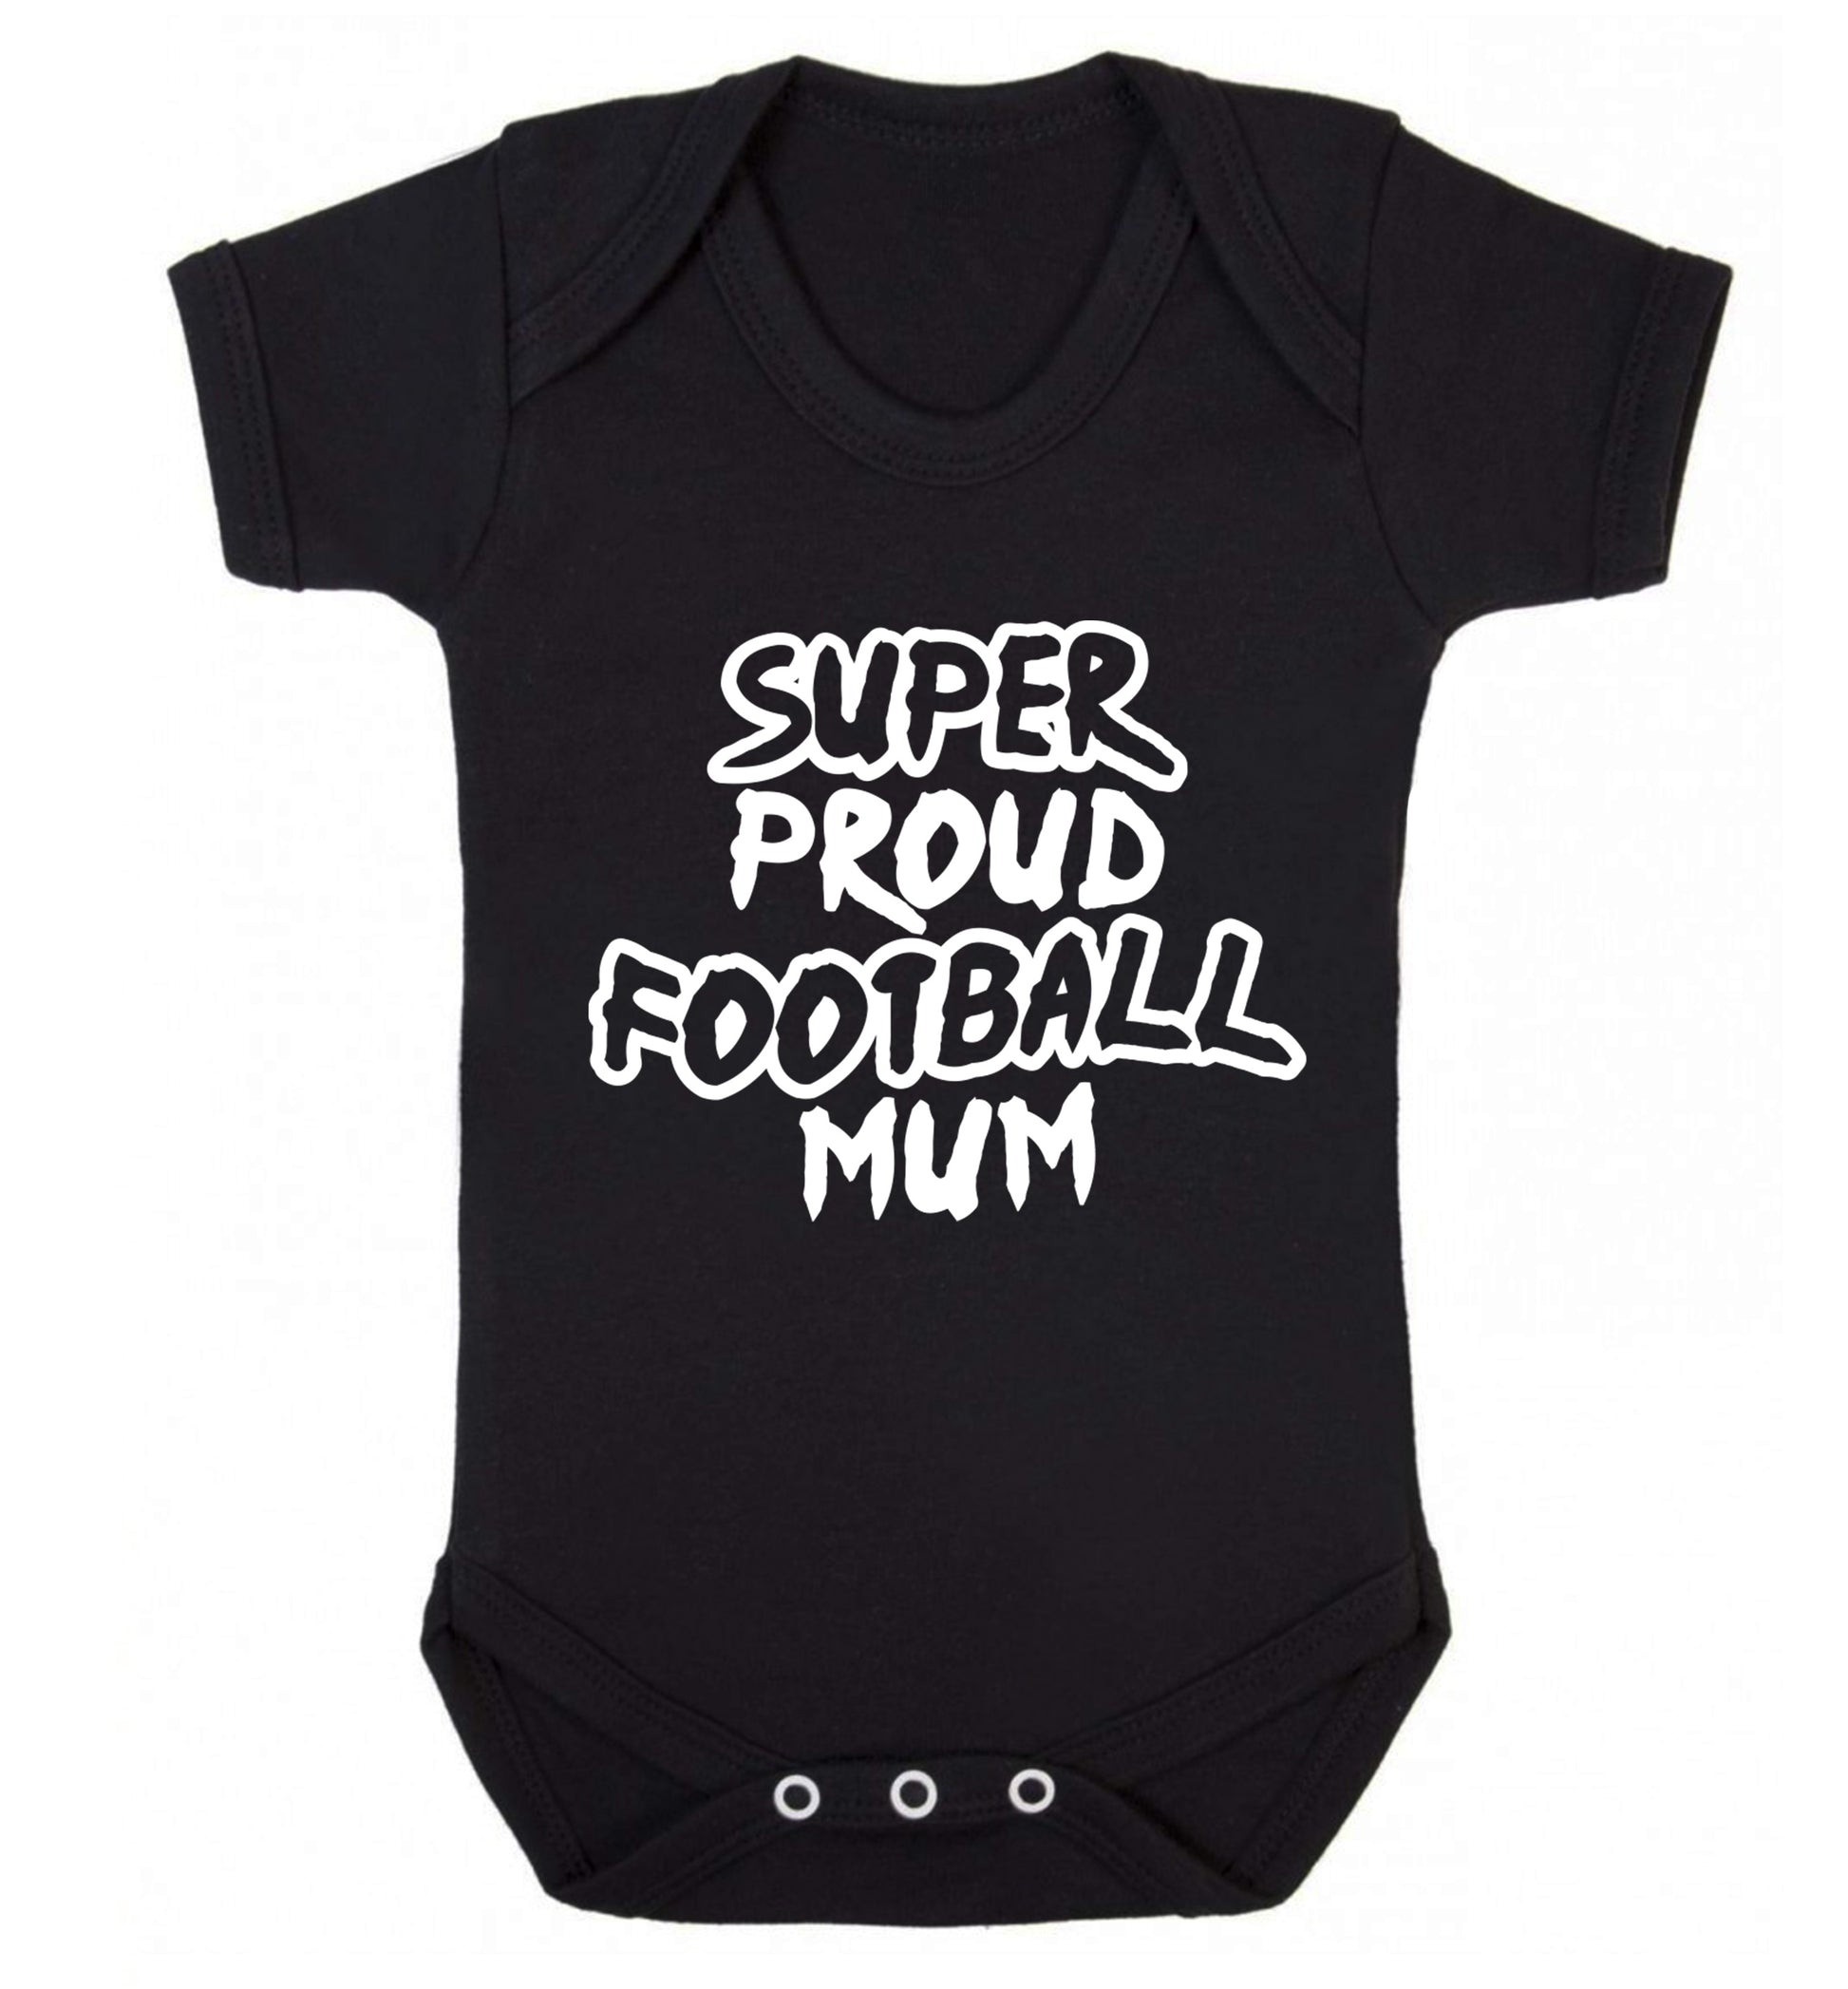 Super proud football mum Baby Vest black 18-24 months